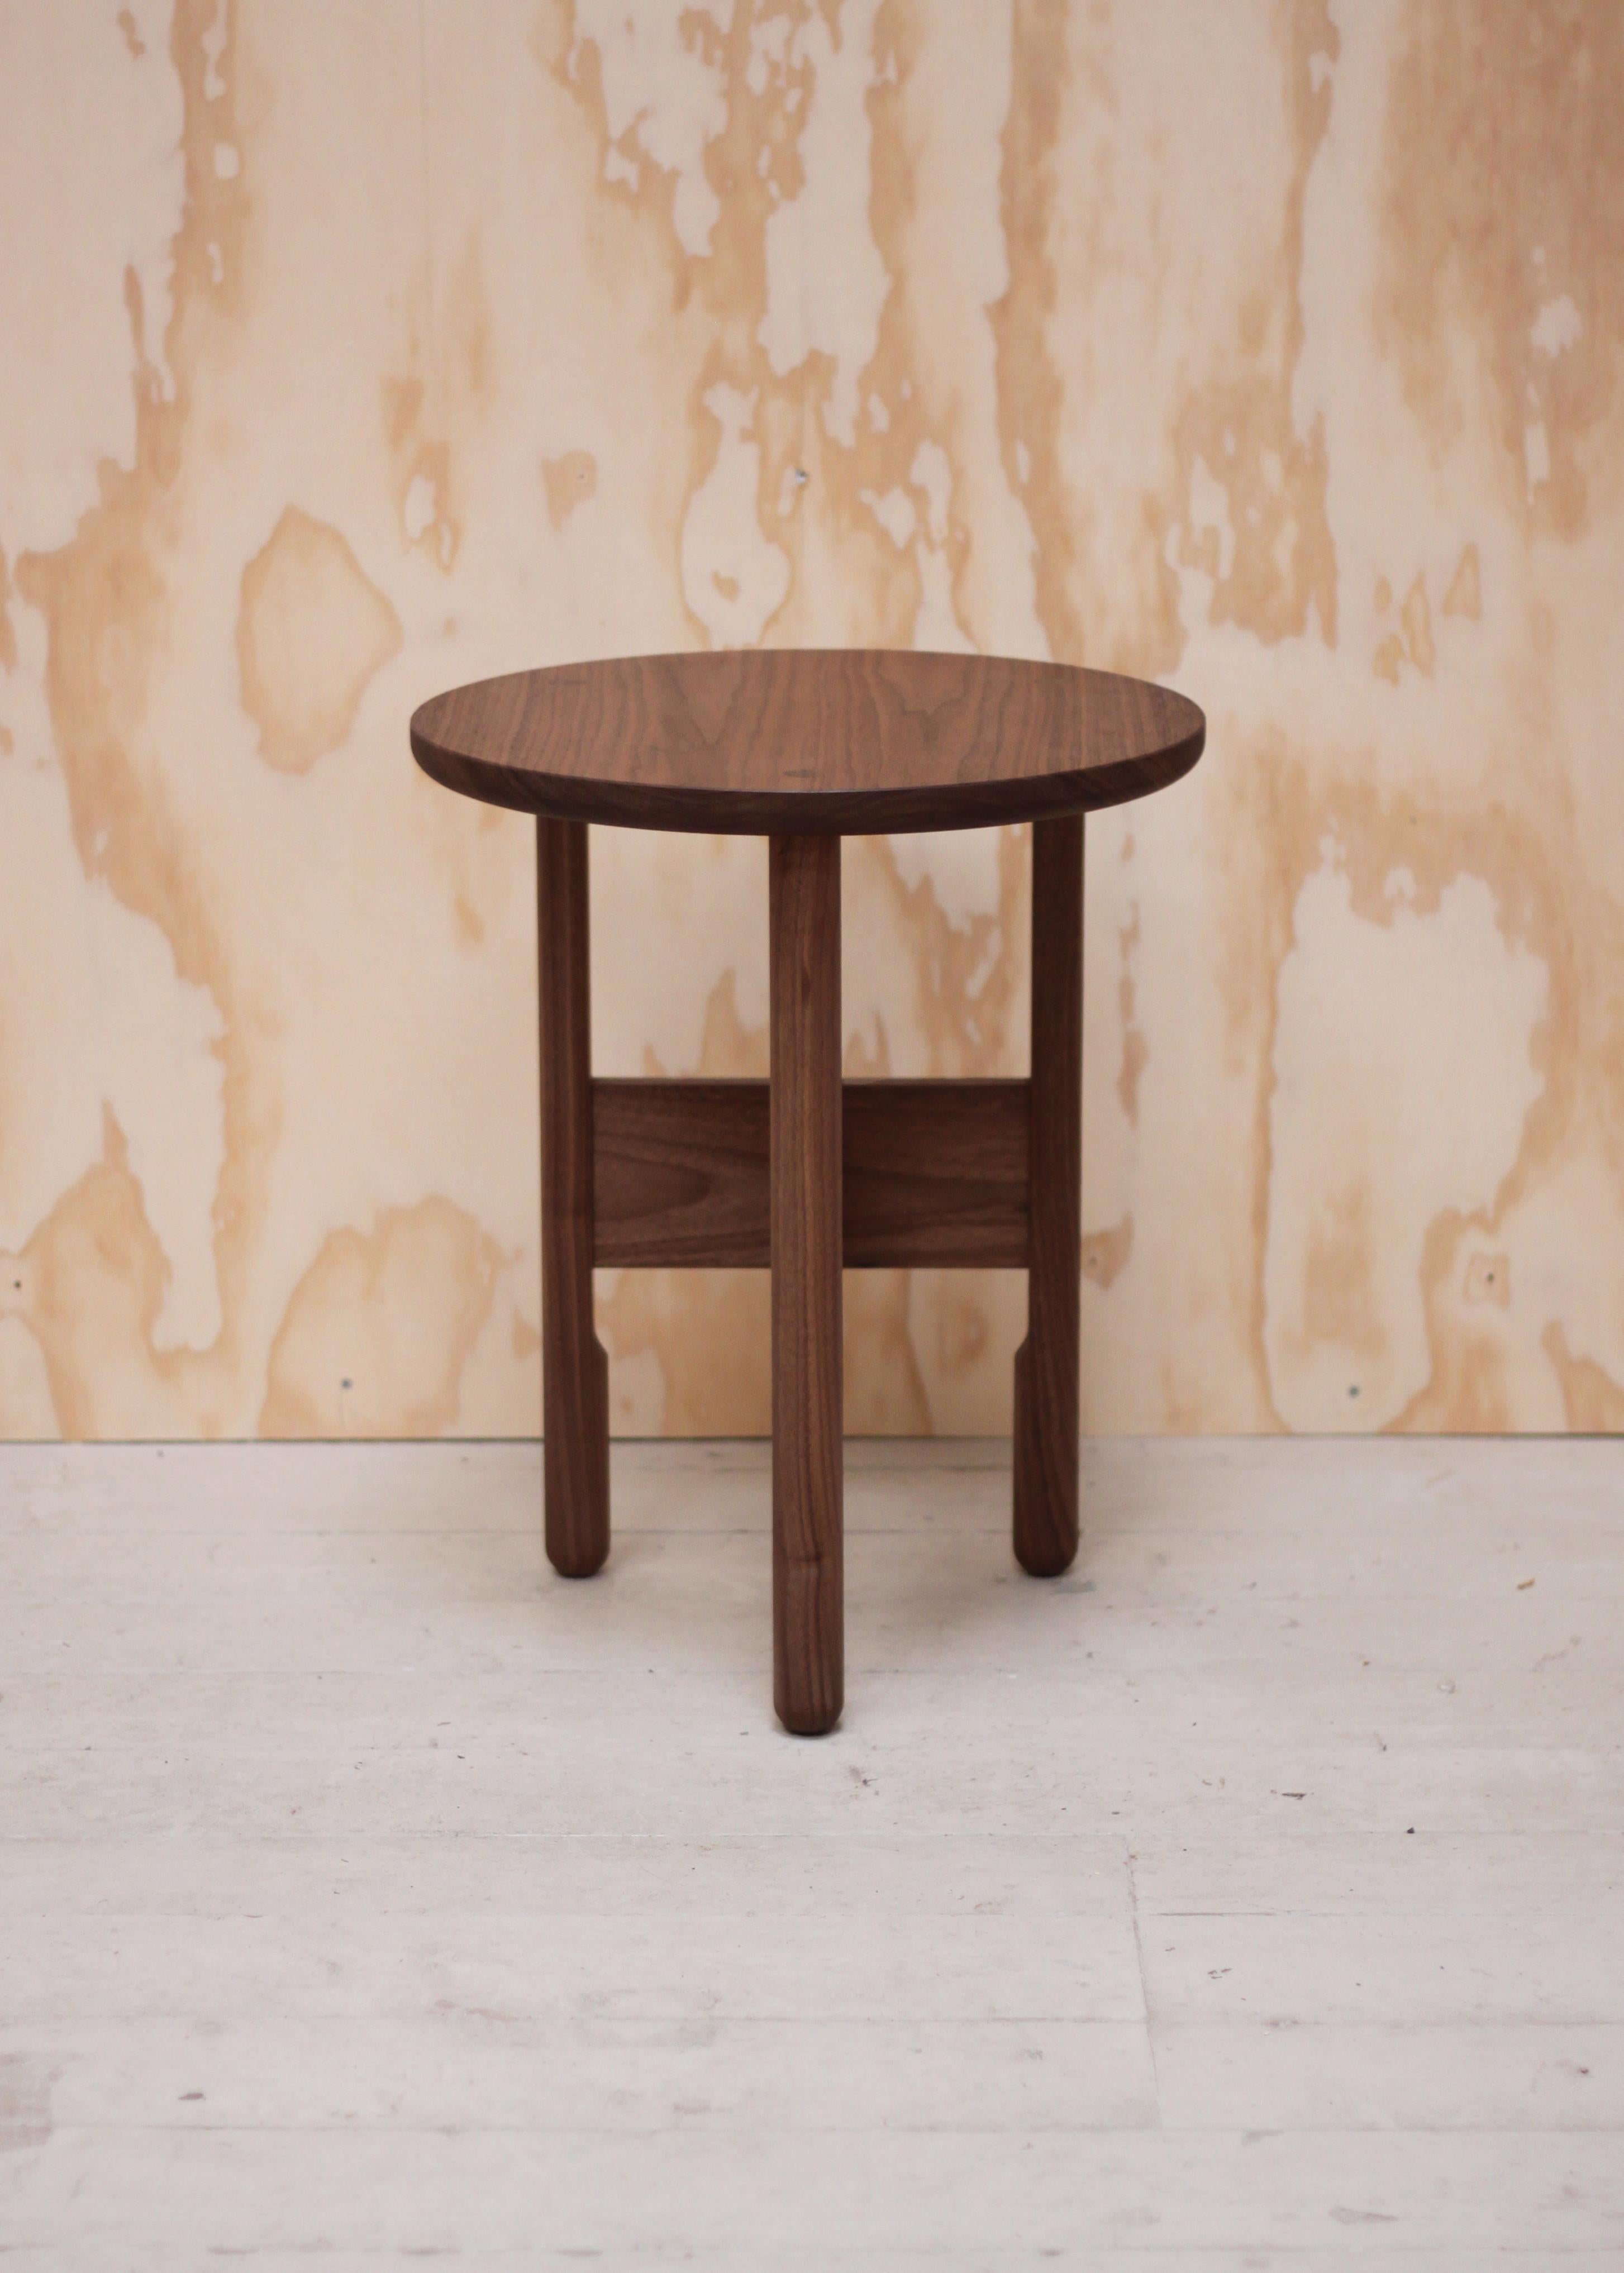 Danish Handmade Hanne Side Table Ø45cm - Walnut - by BACD studio For Sale